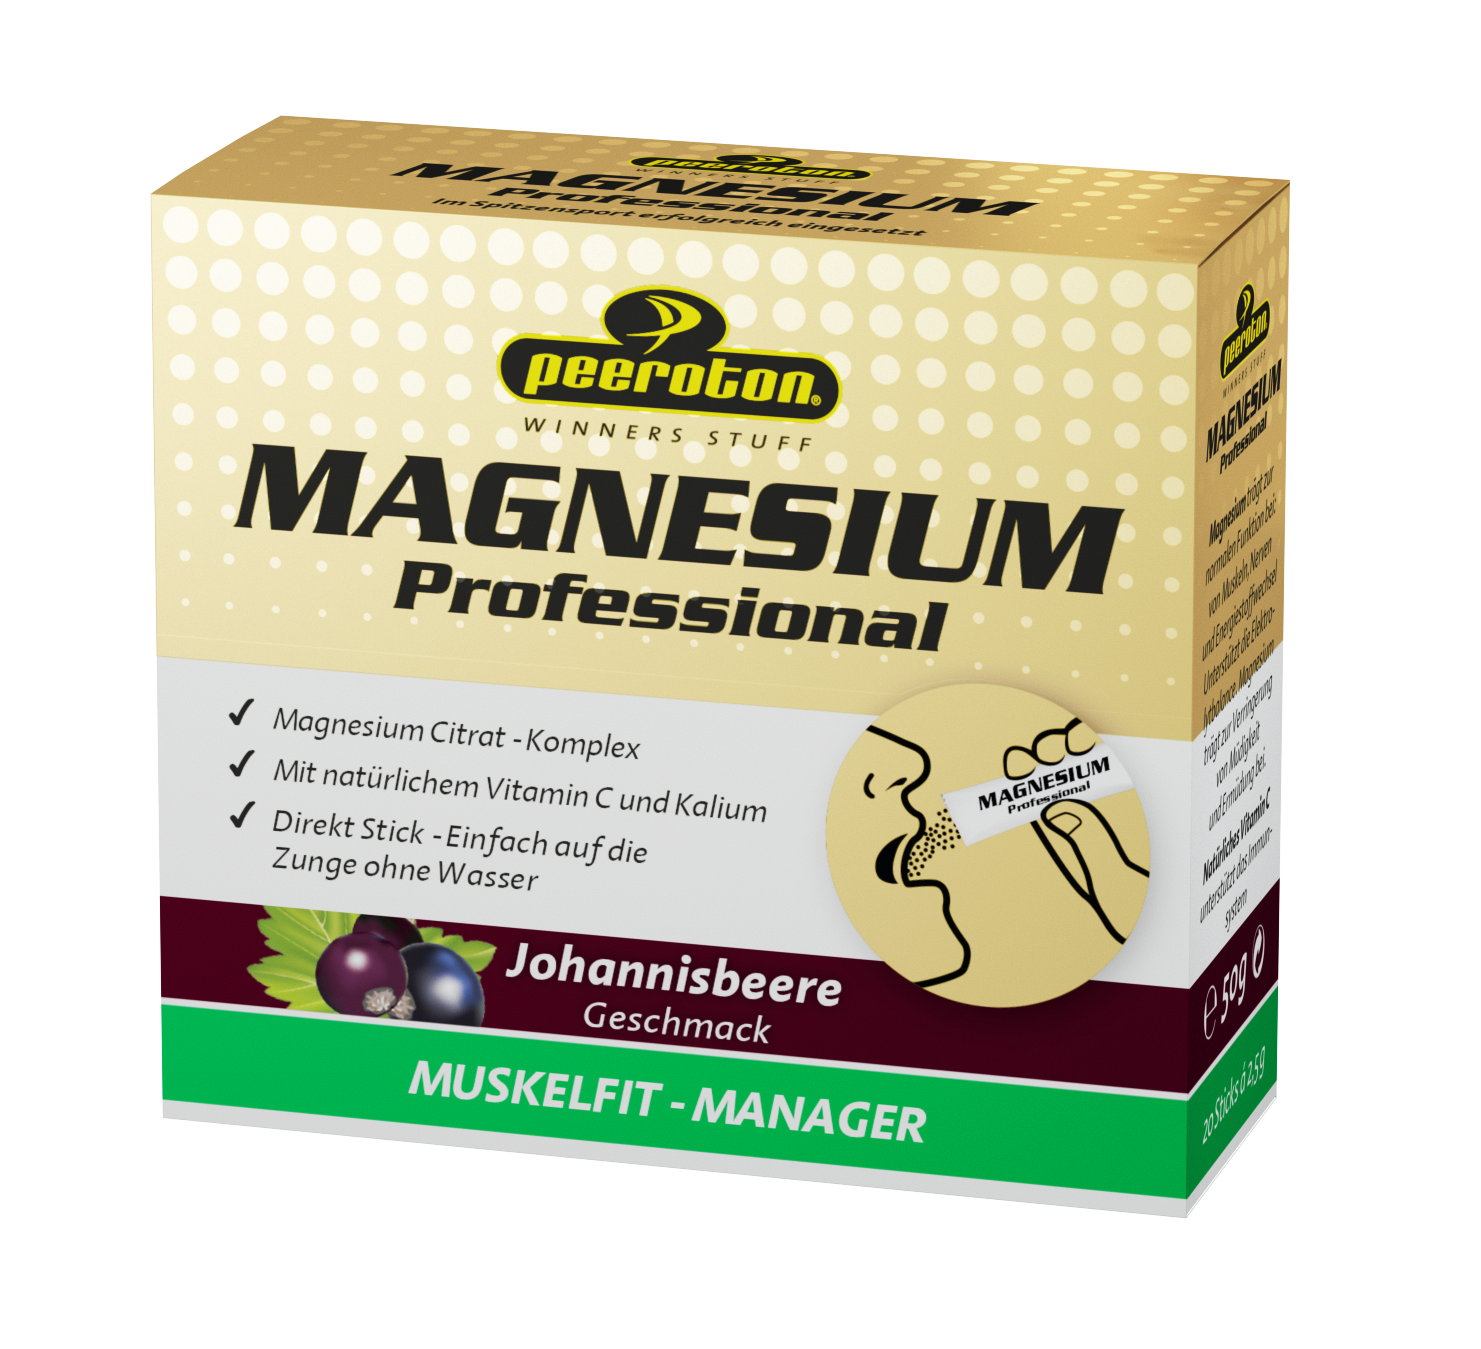 Peeroton Magnesium Professional